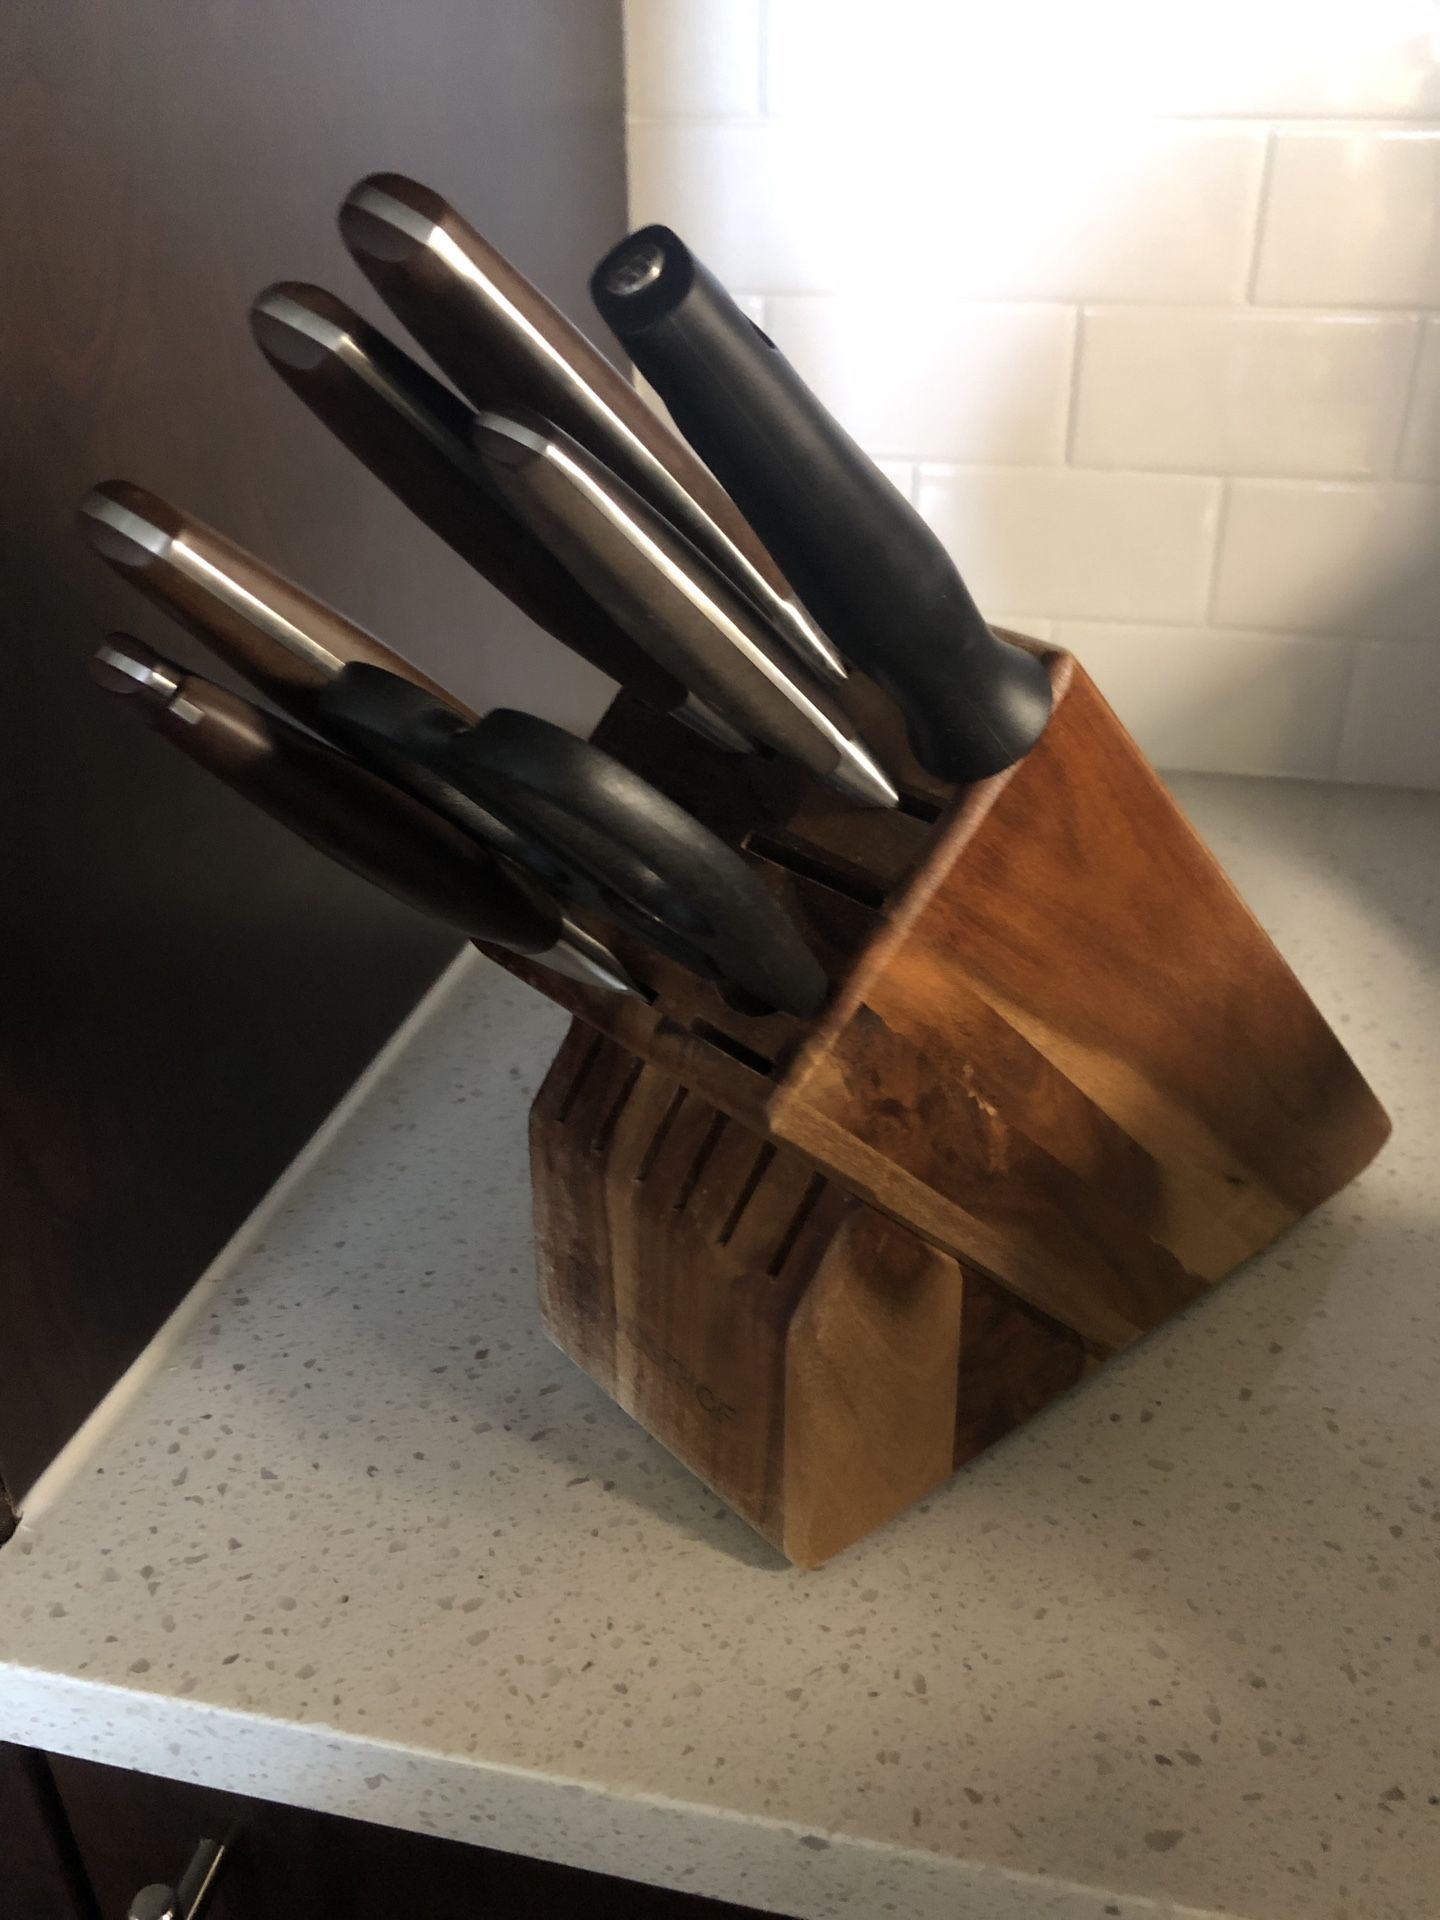 Wusthof Epicure 7-piece Knife Set with wooden block, sharpener, scissor etc.